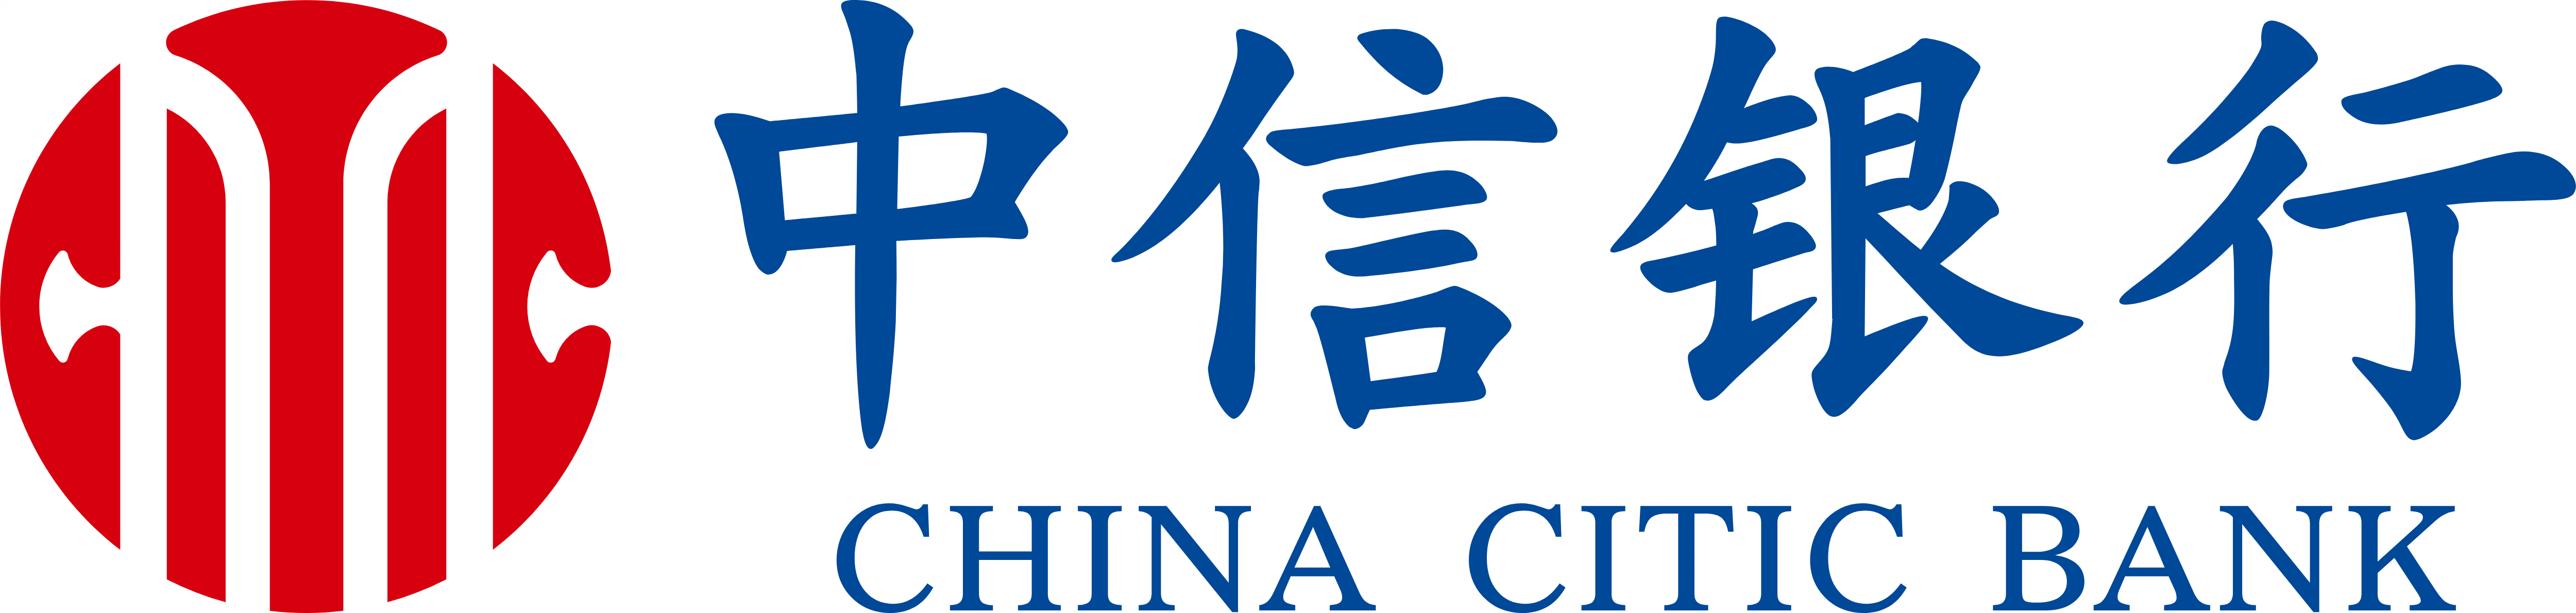 China CITIC Bank Colors